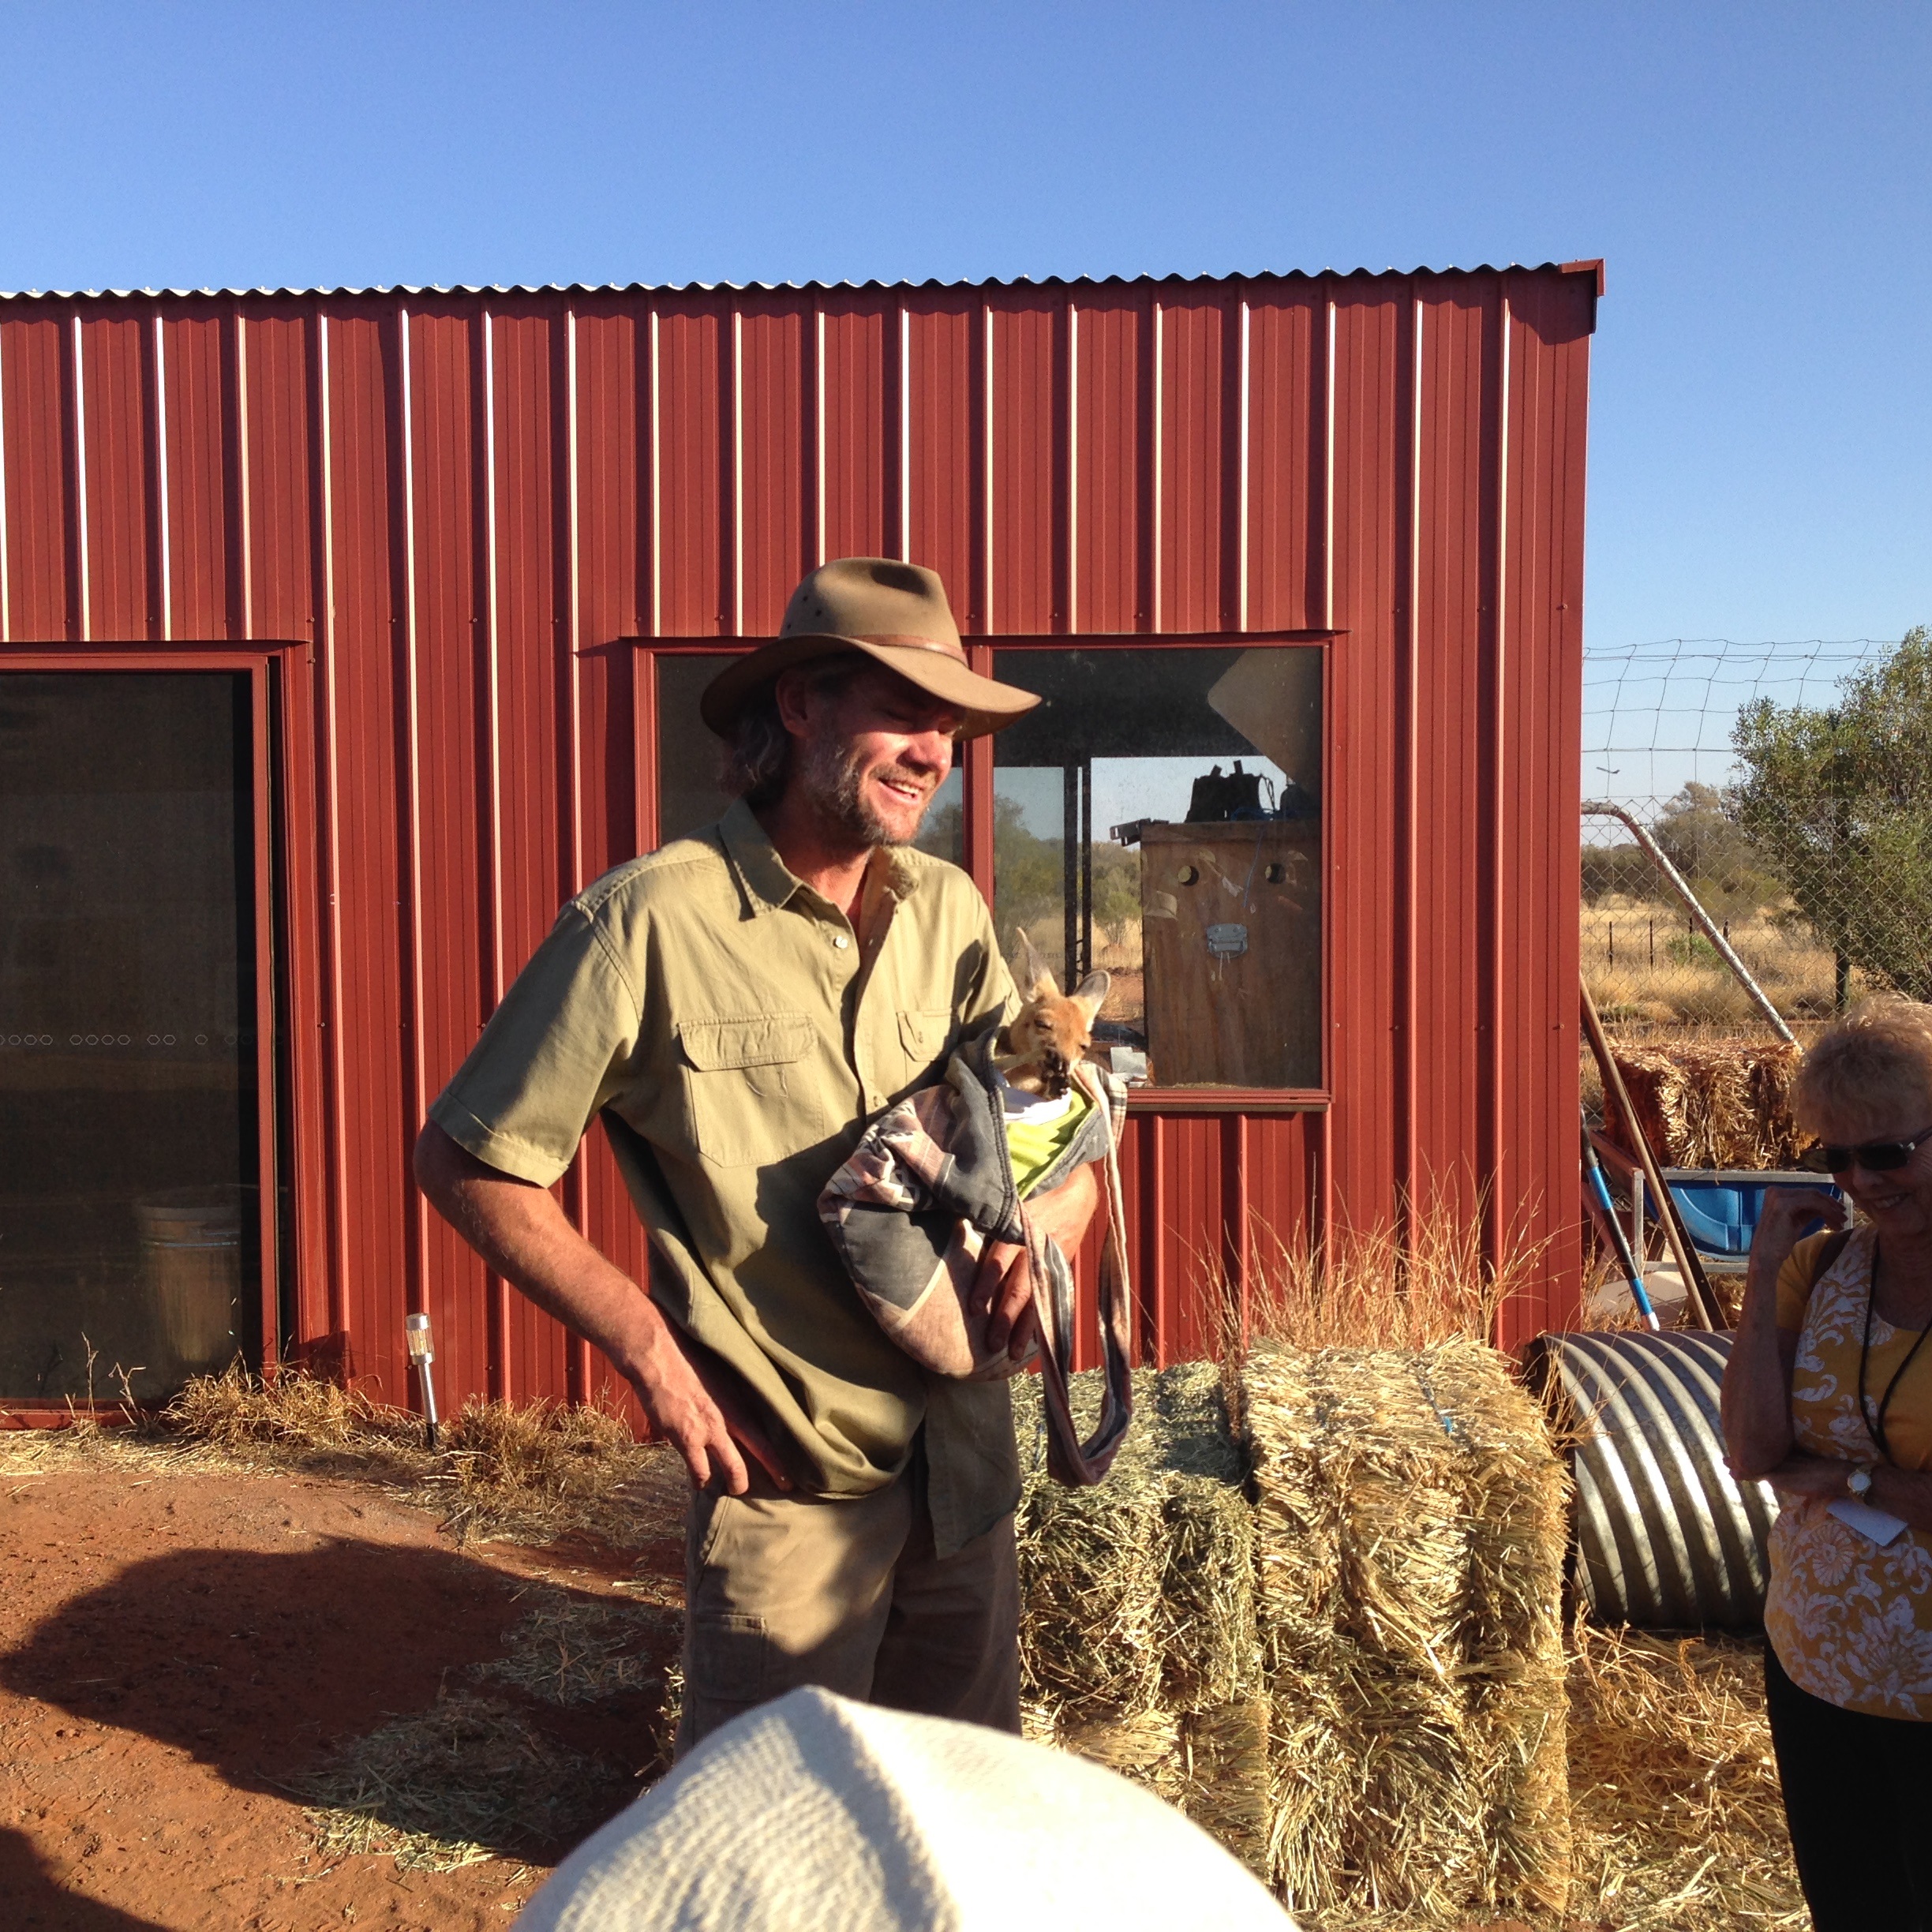 Brolga welcomes us to his kangaroo sanctuary